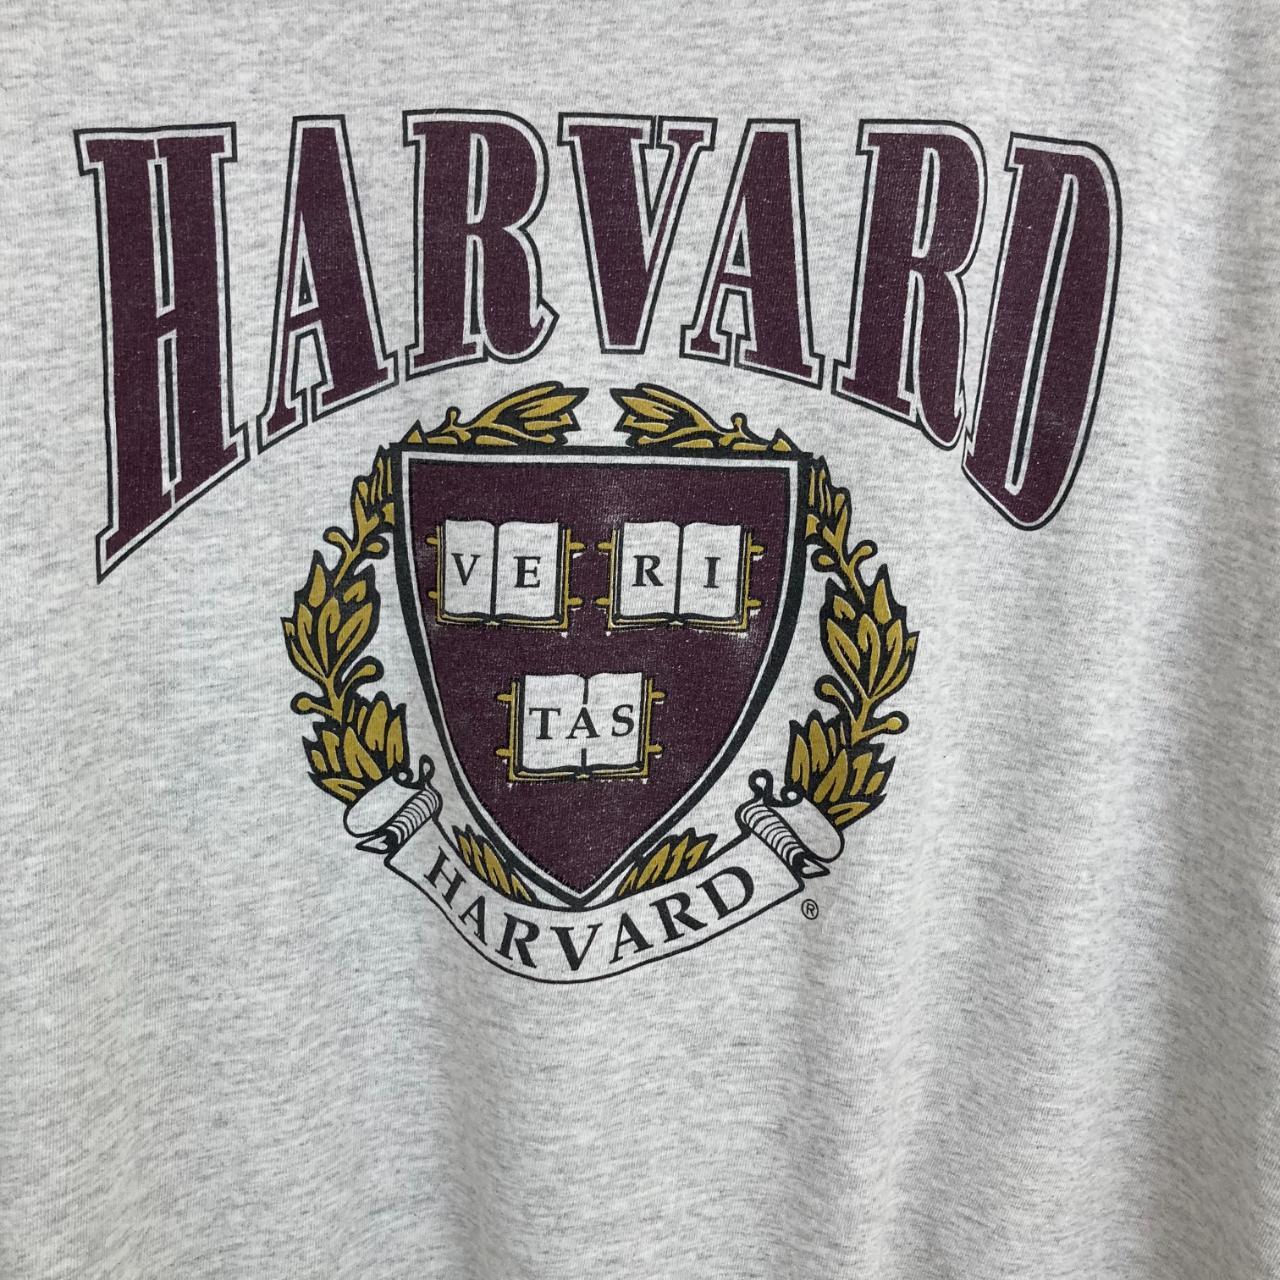 Vintage Harvard T-shirt | Ve RI TAS crest 